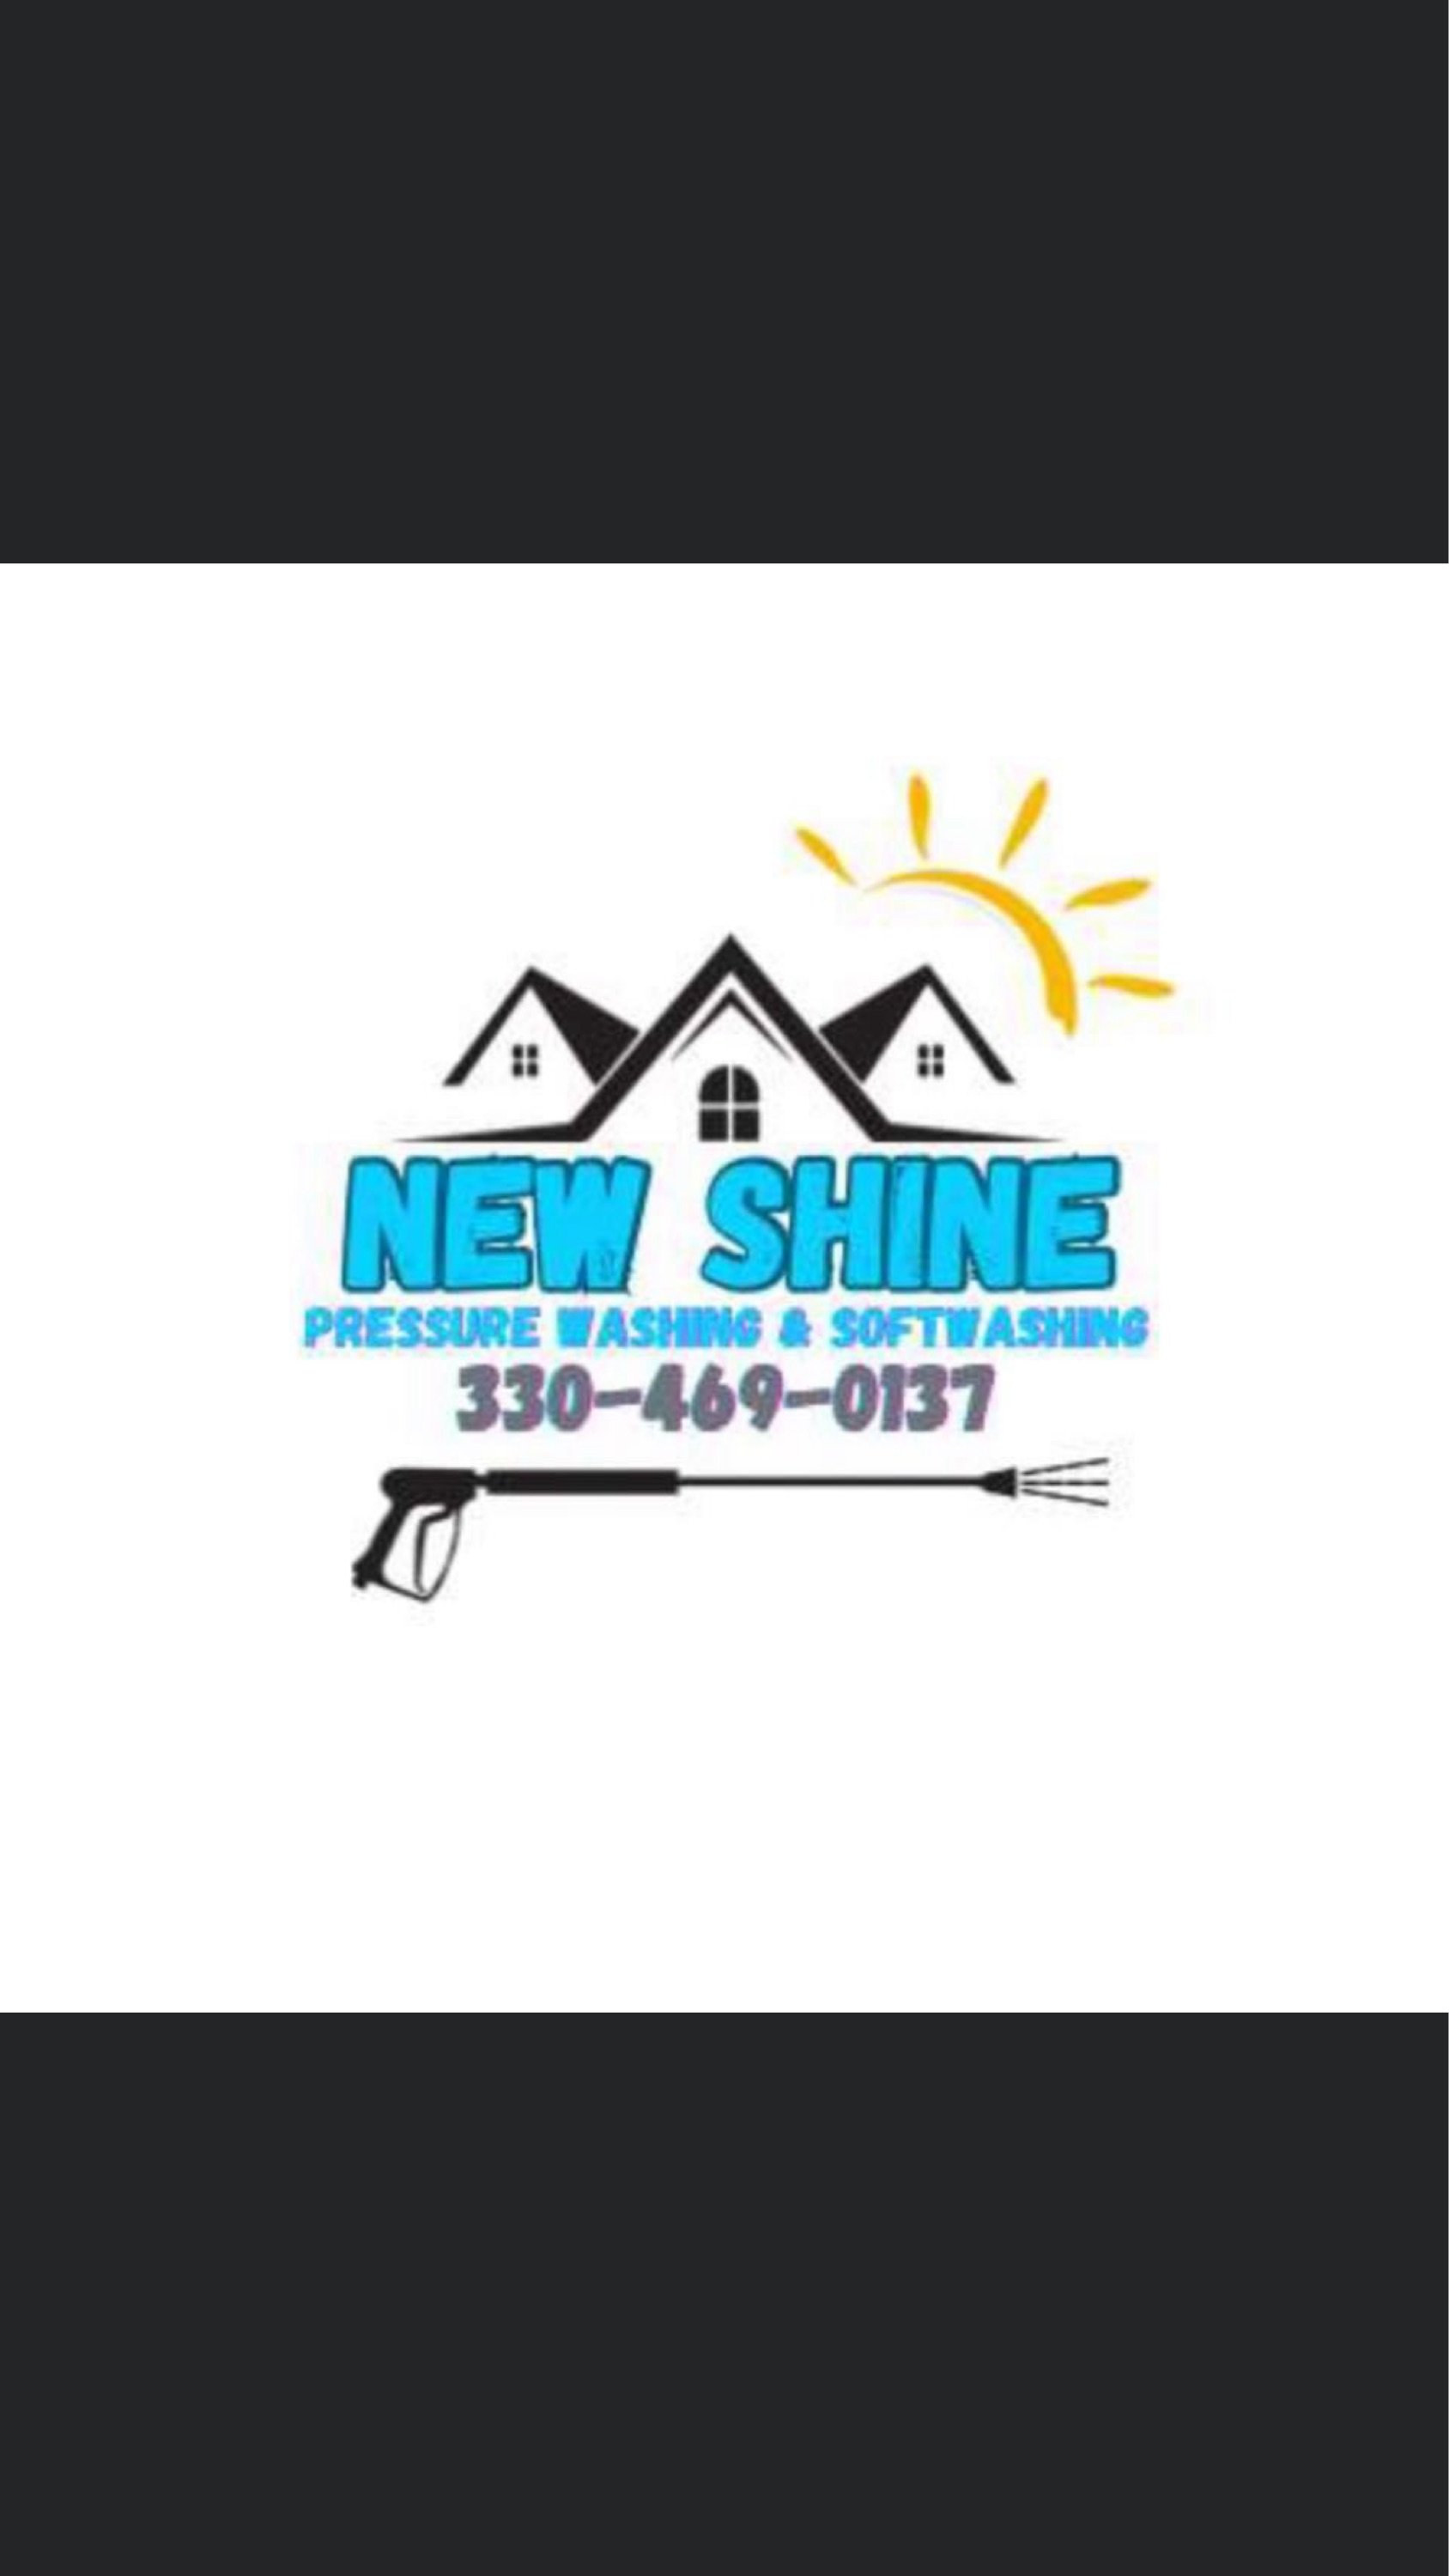 NEW SHINE PRESSURE WASH LLC Logo